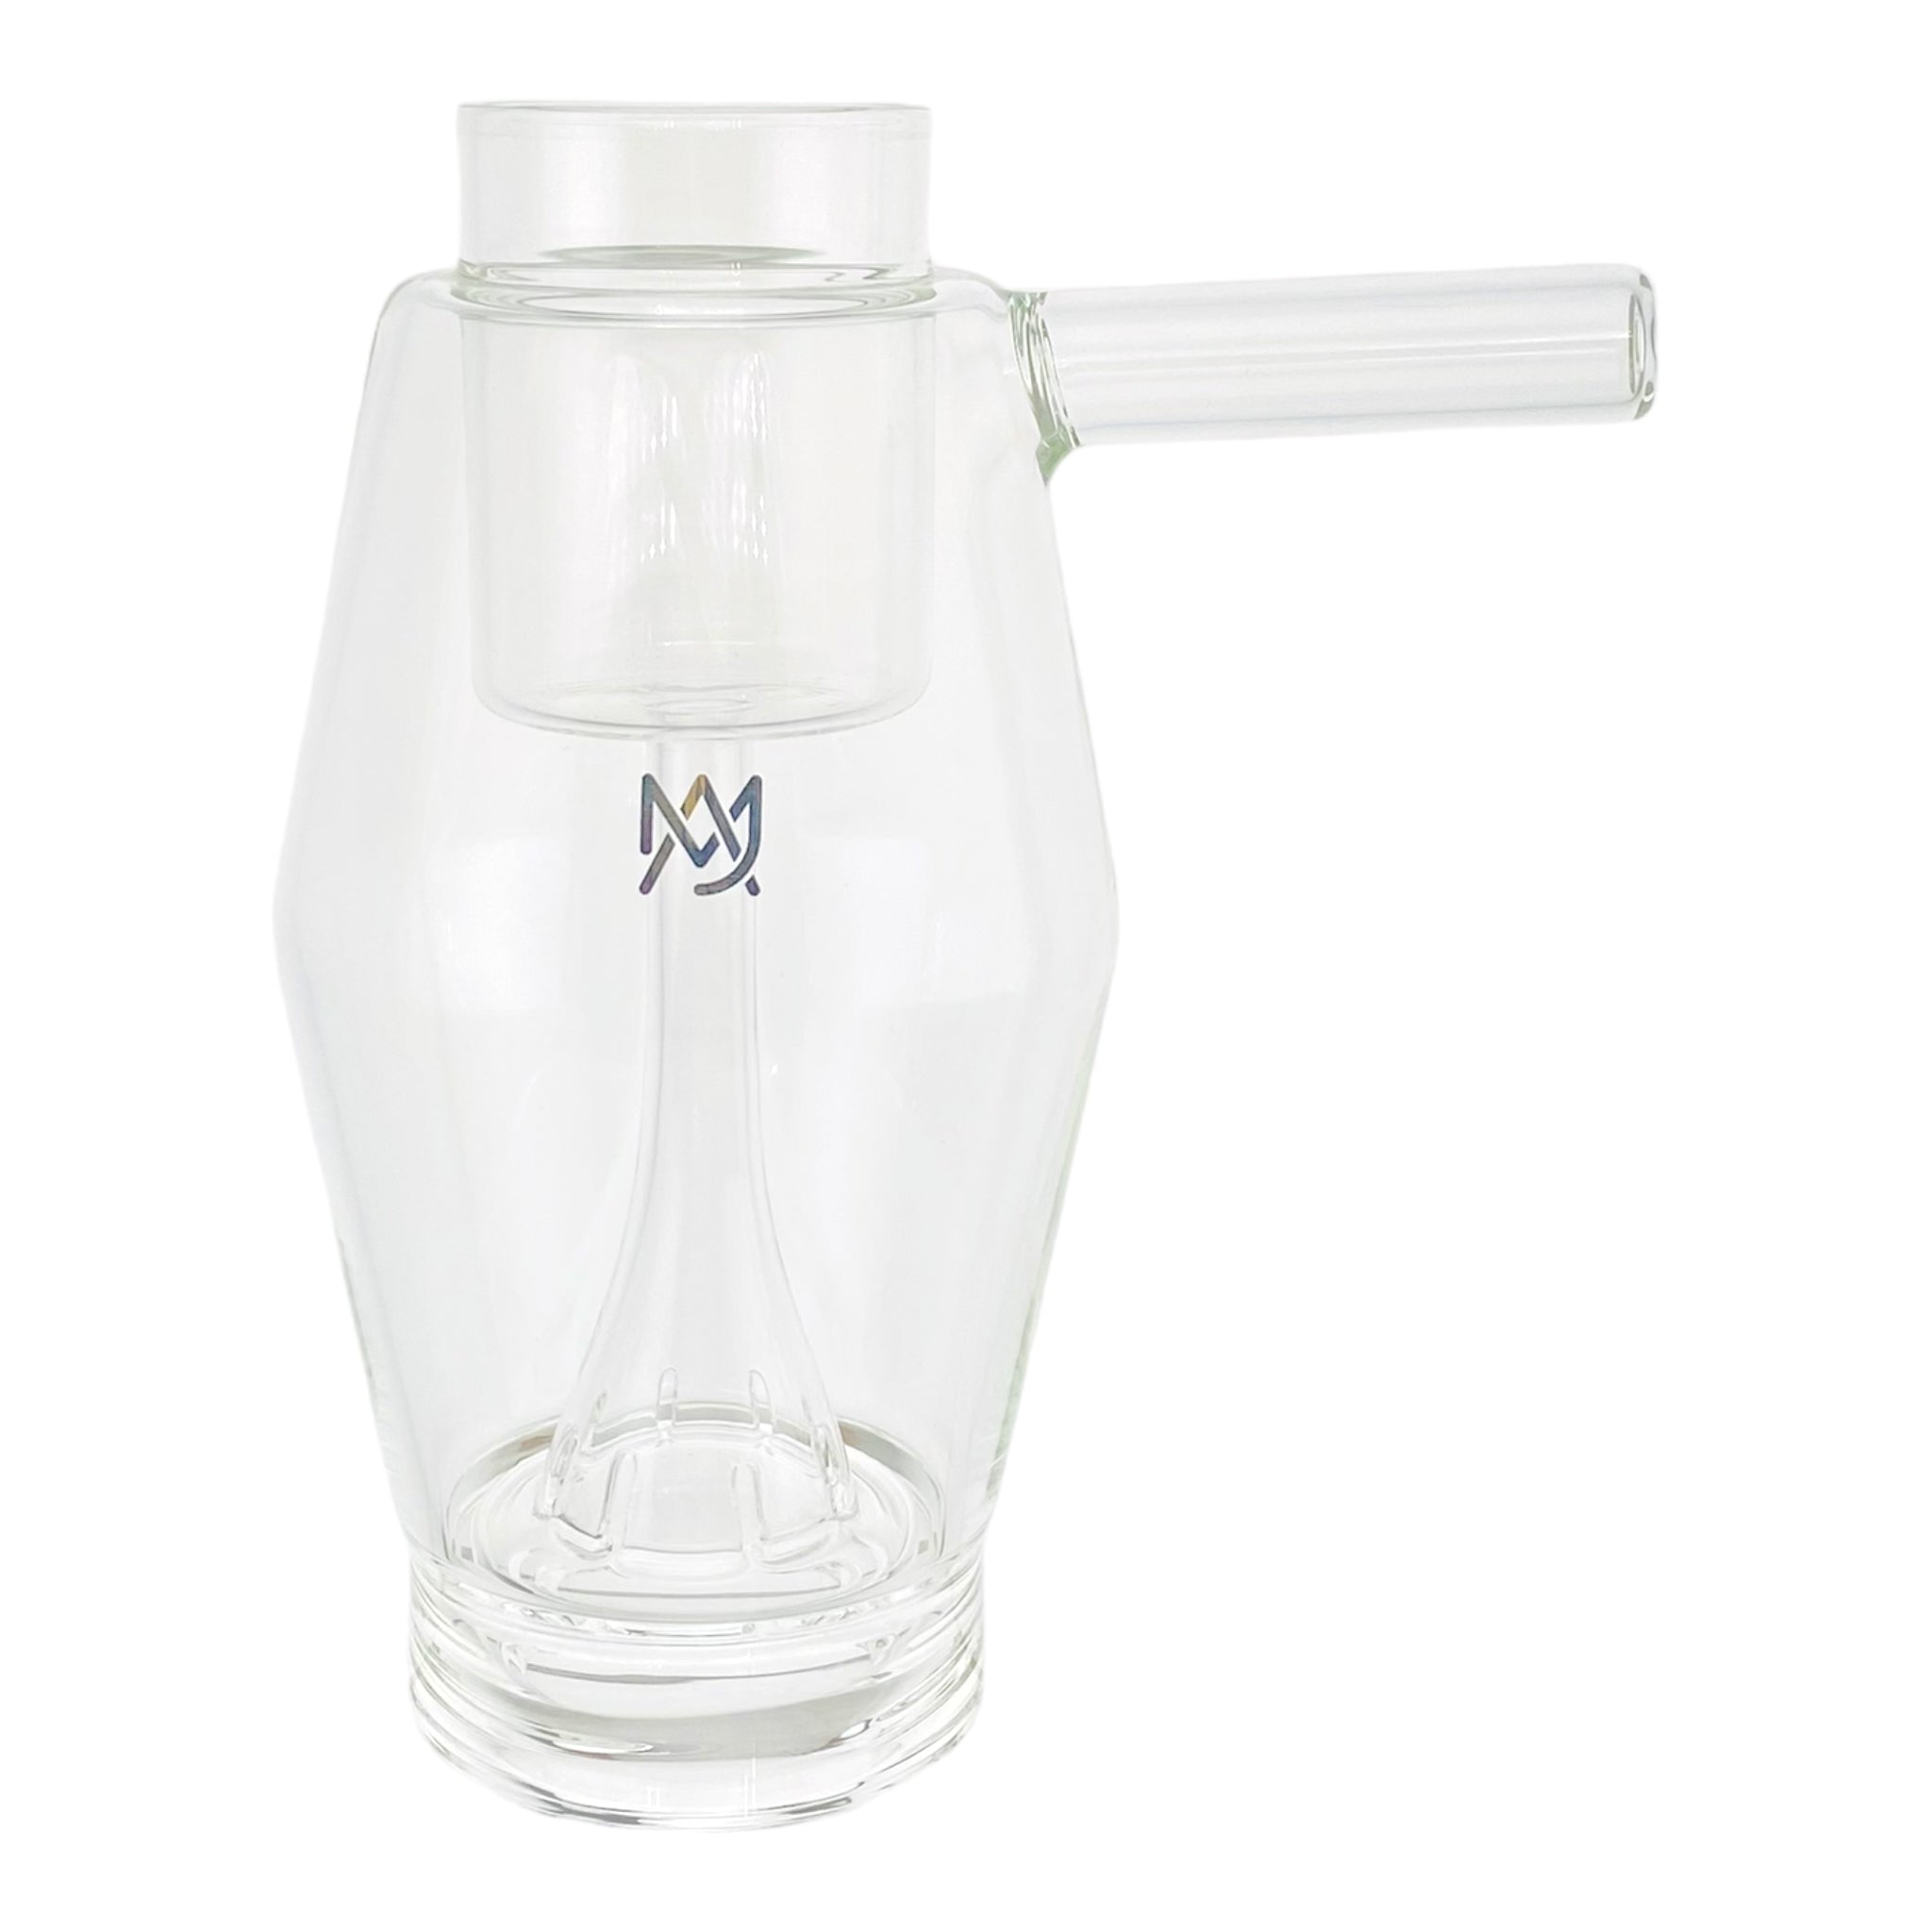 MJ Arsenal Proxy Glass Bubbler - Large